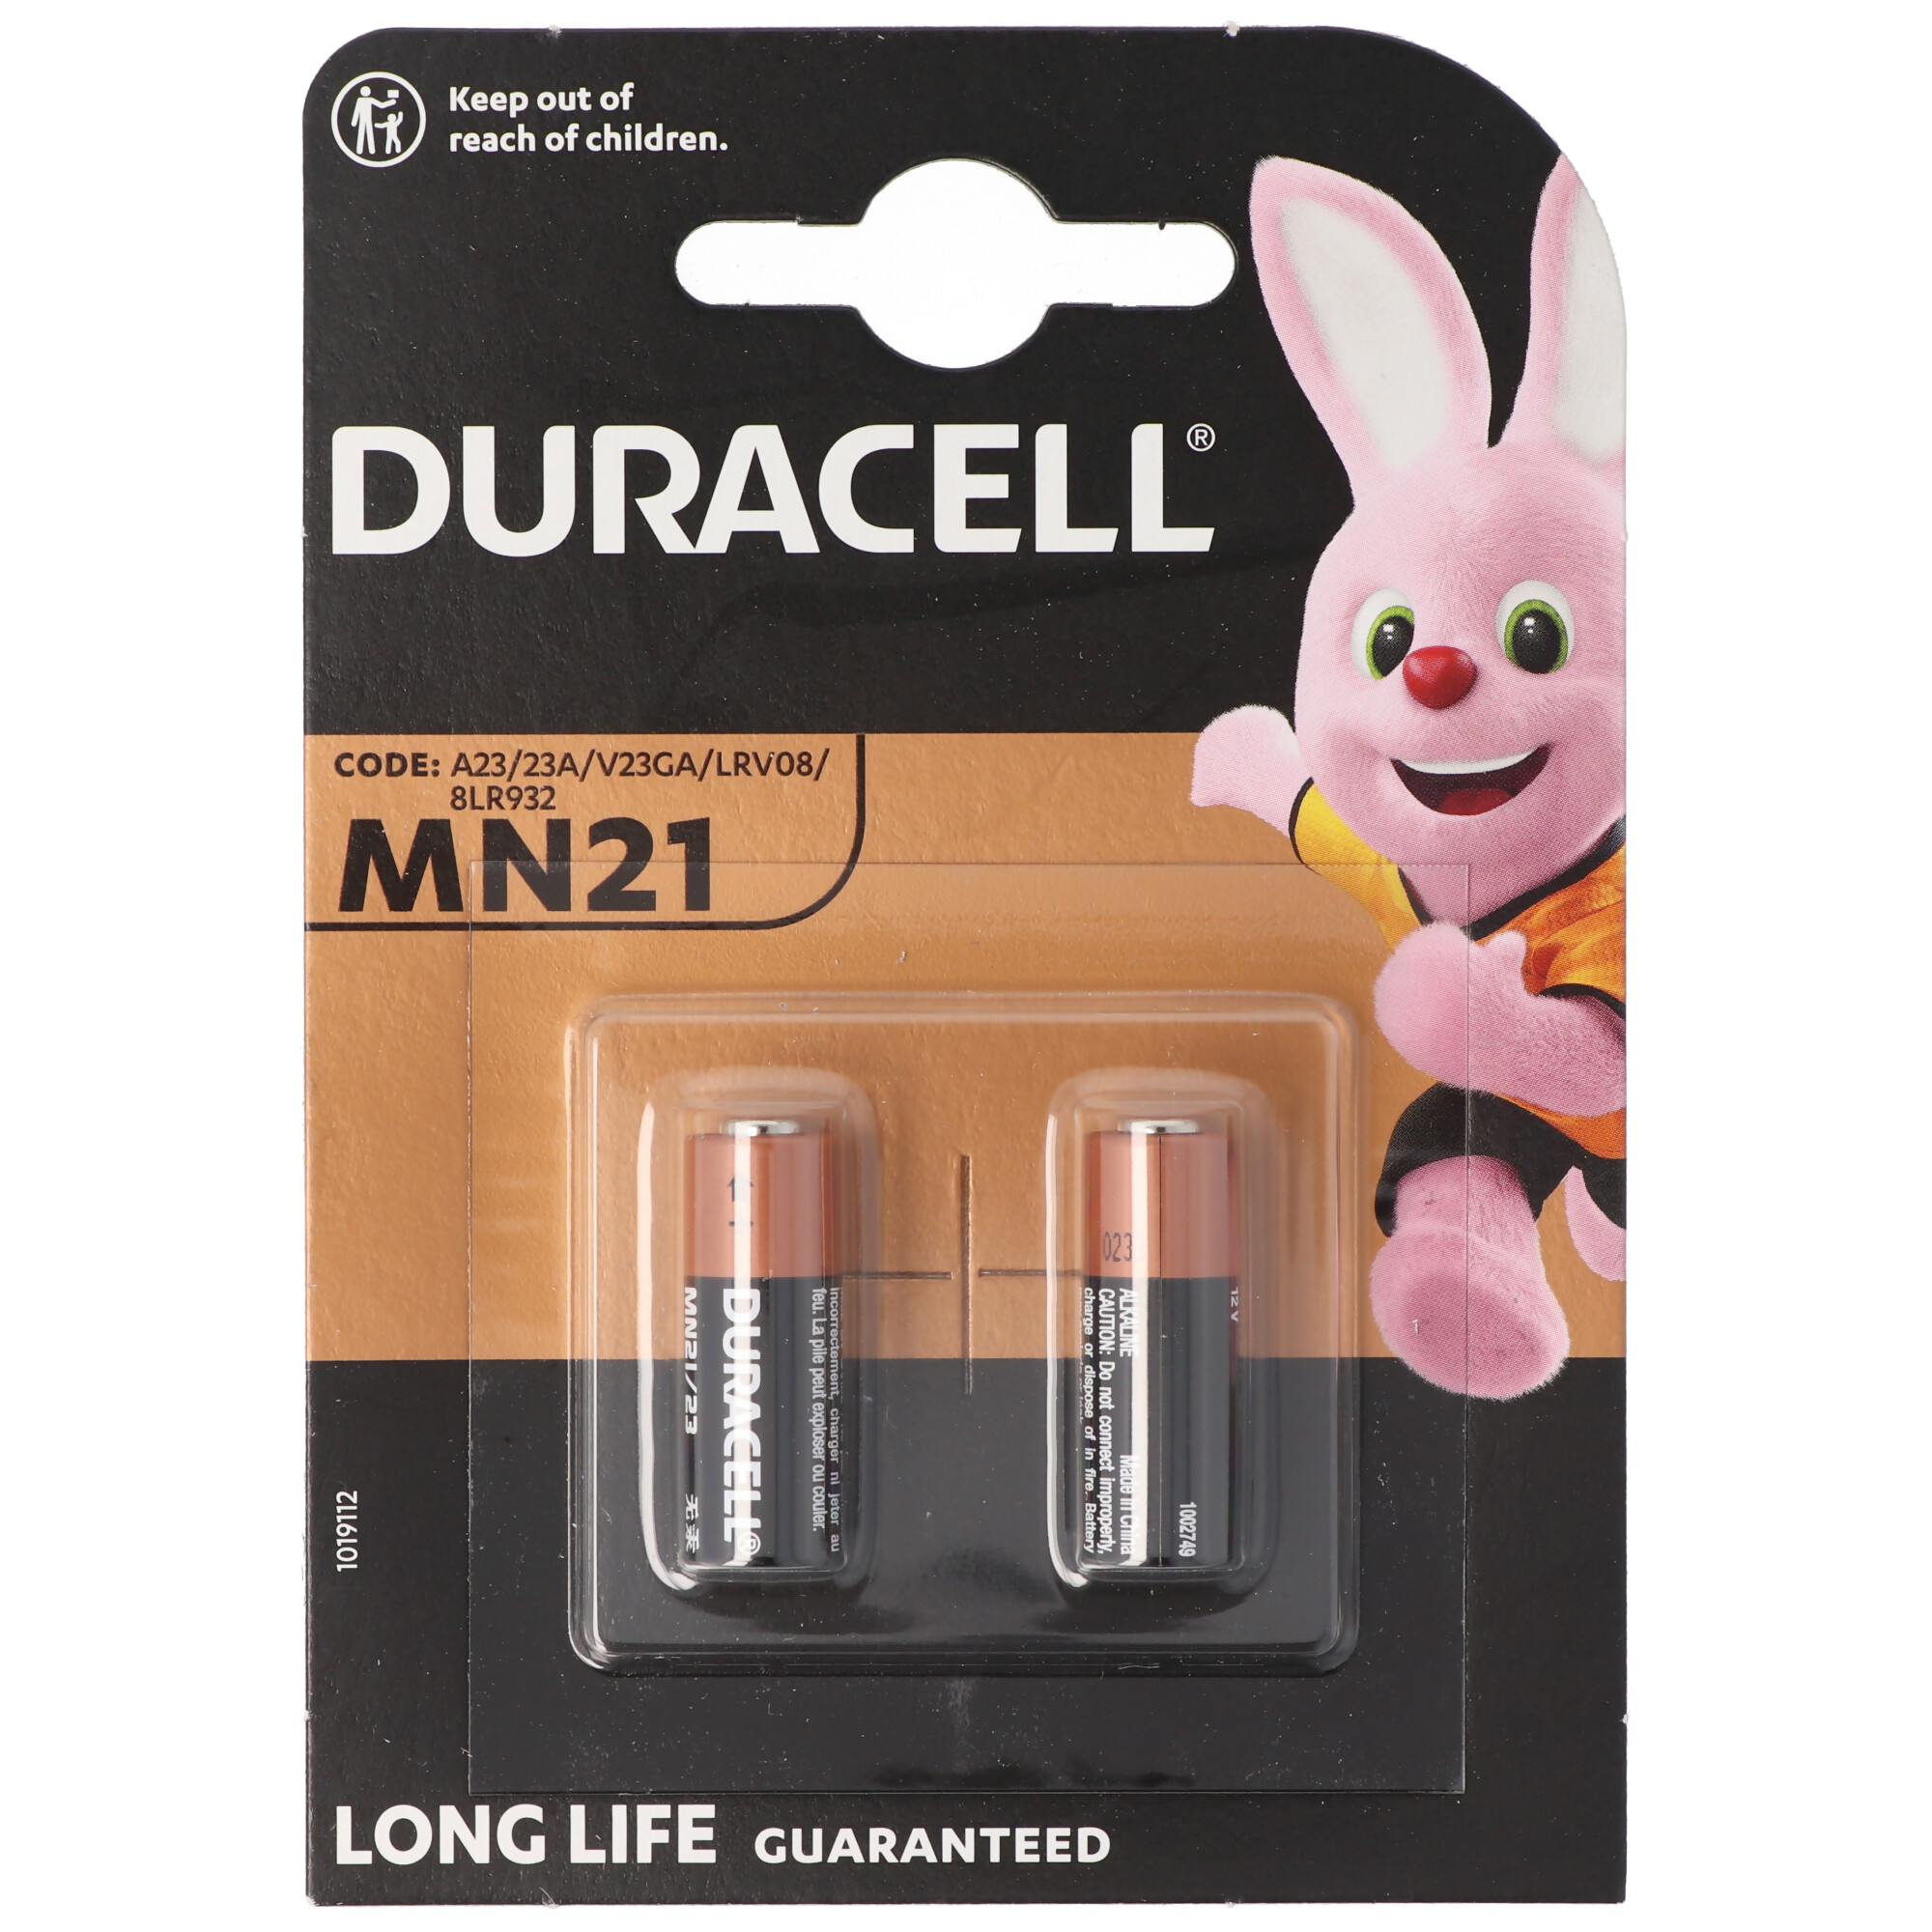 Duracell 6x Duracell MN21 Alkalisch A23 23A V23GA 12V Batterien Schlüsselbänder Alarm, 